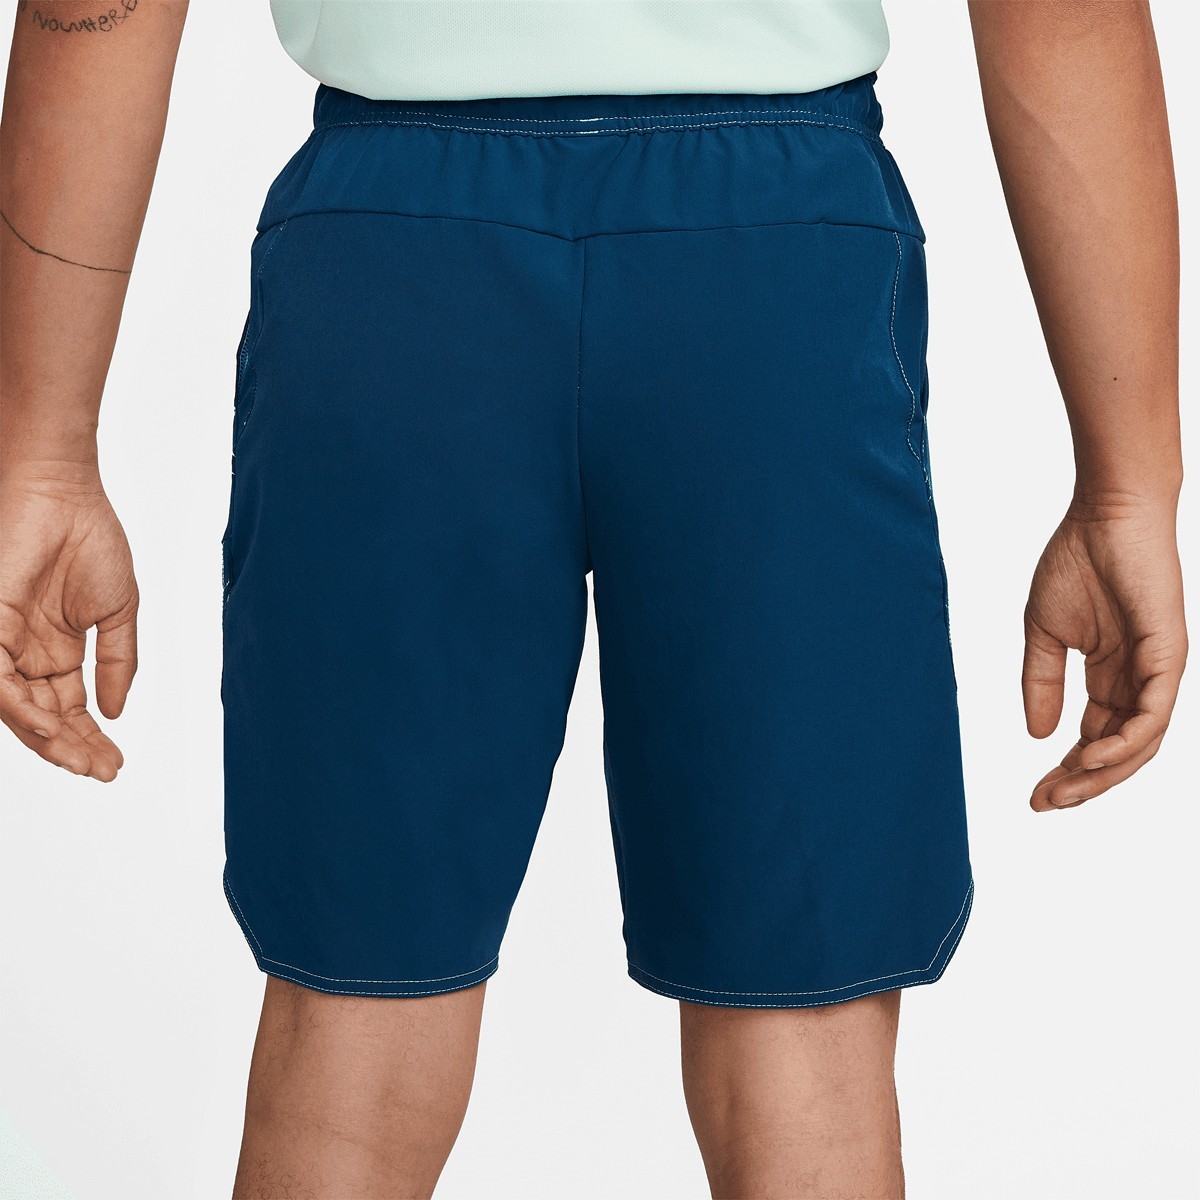 Теннисные шорты мужские Nike Court Advantage Short 9in valerian blue/white